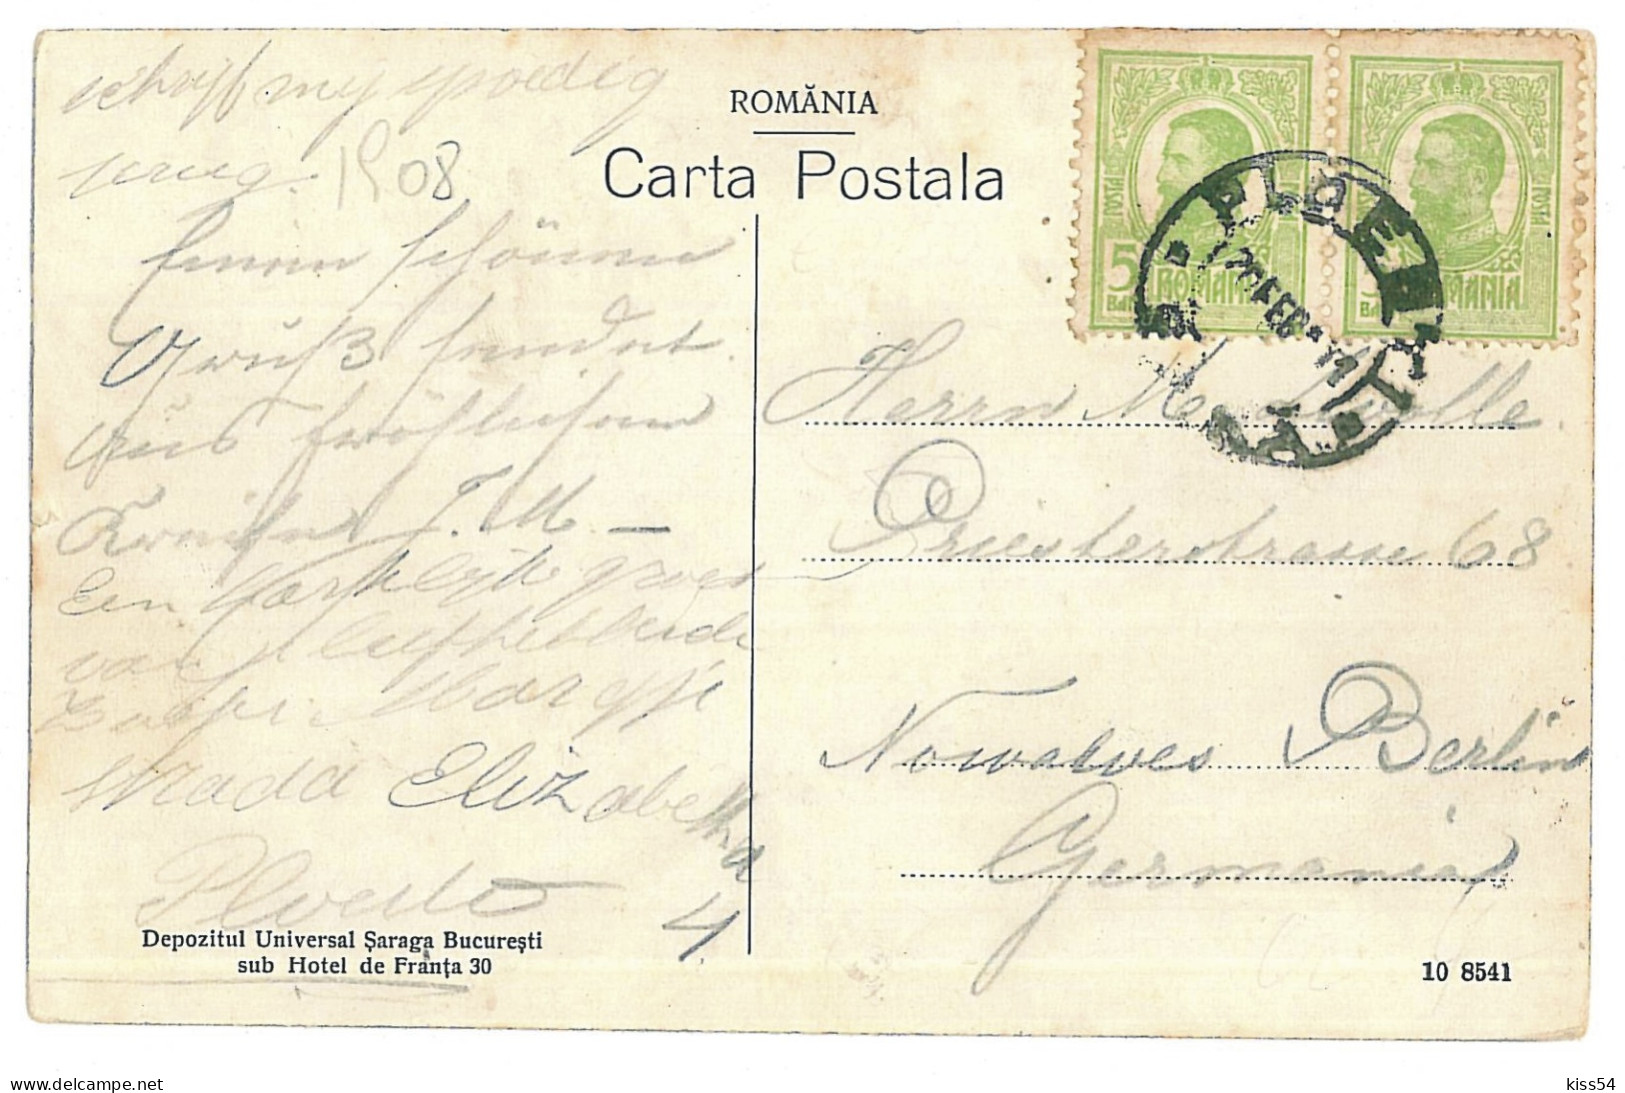 RO 84 - 11493 PLOIESTI, Market, Romania - Old Postcard - Used - 1908 - Roumanie